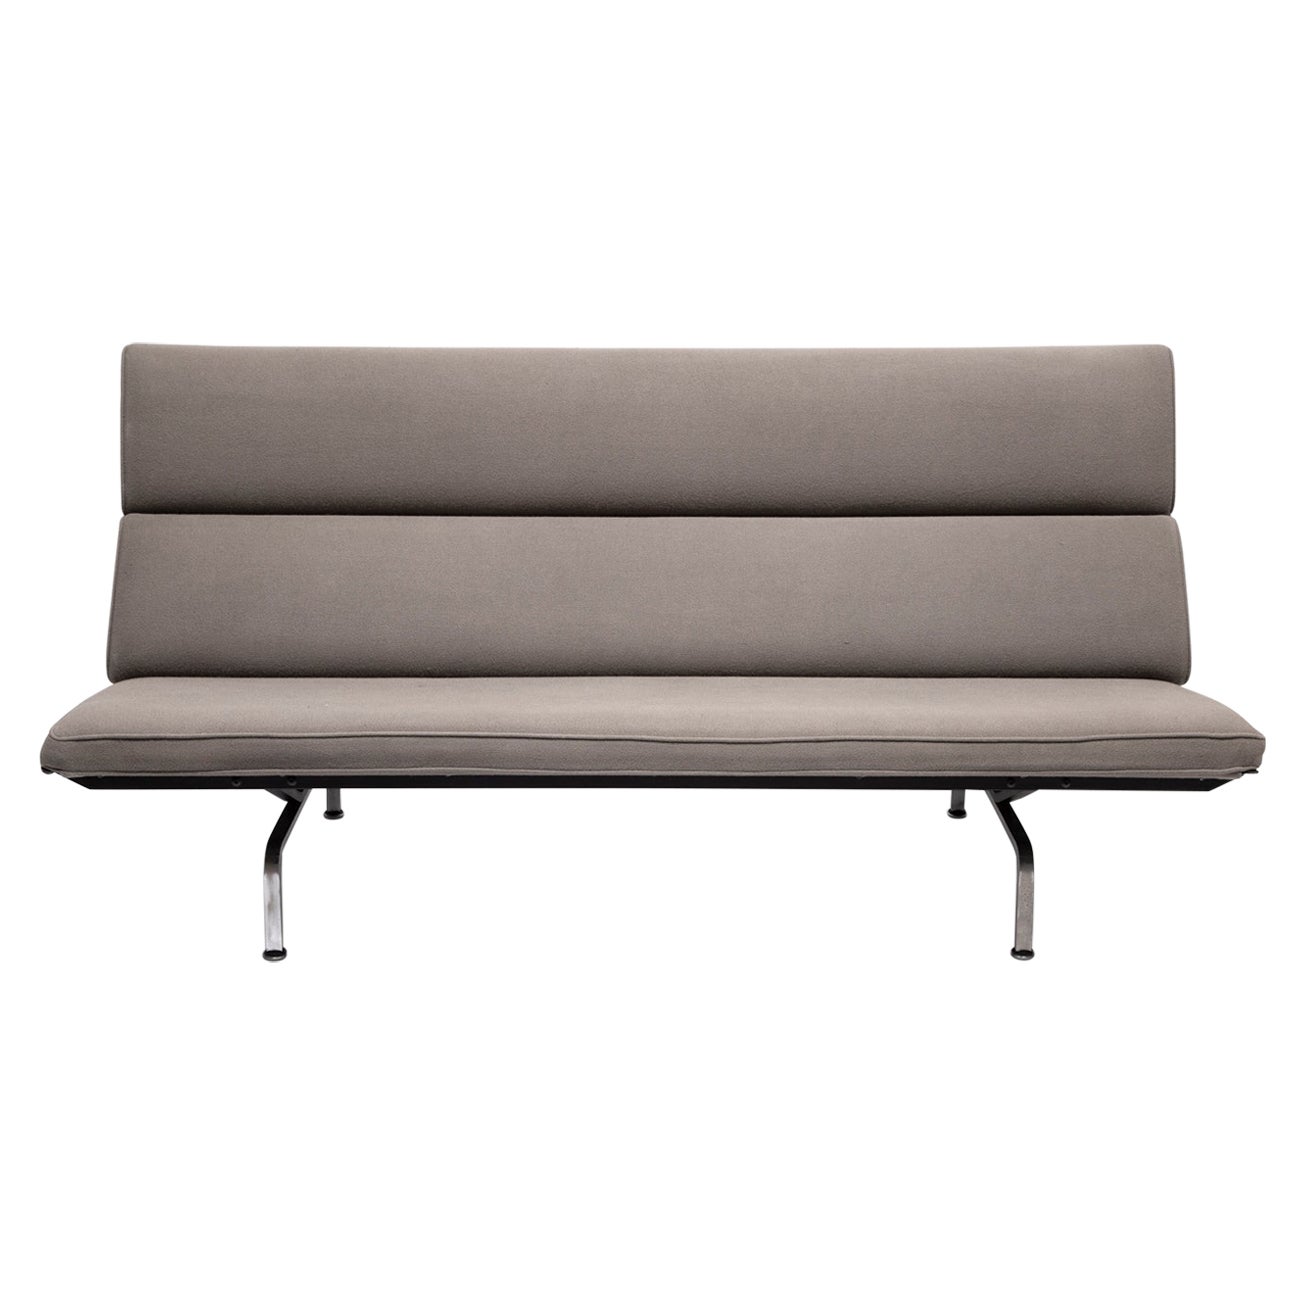 "Compact Sofa" Ray & Charles Eames Godparents Gift to Eric Saarinen, Original